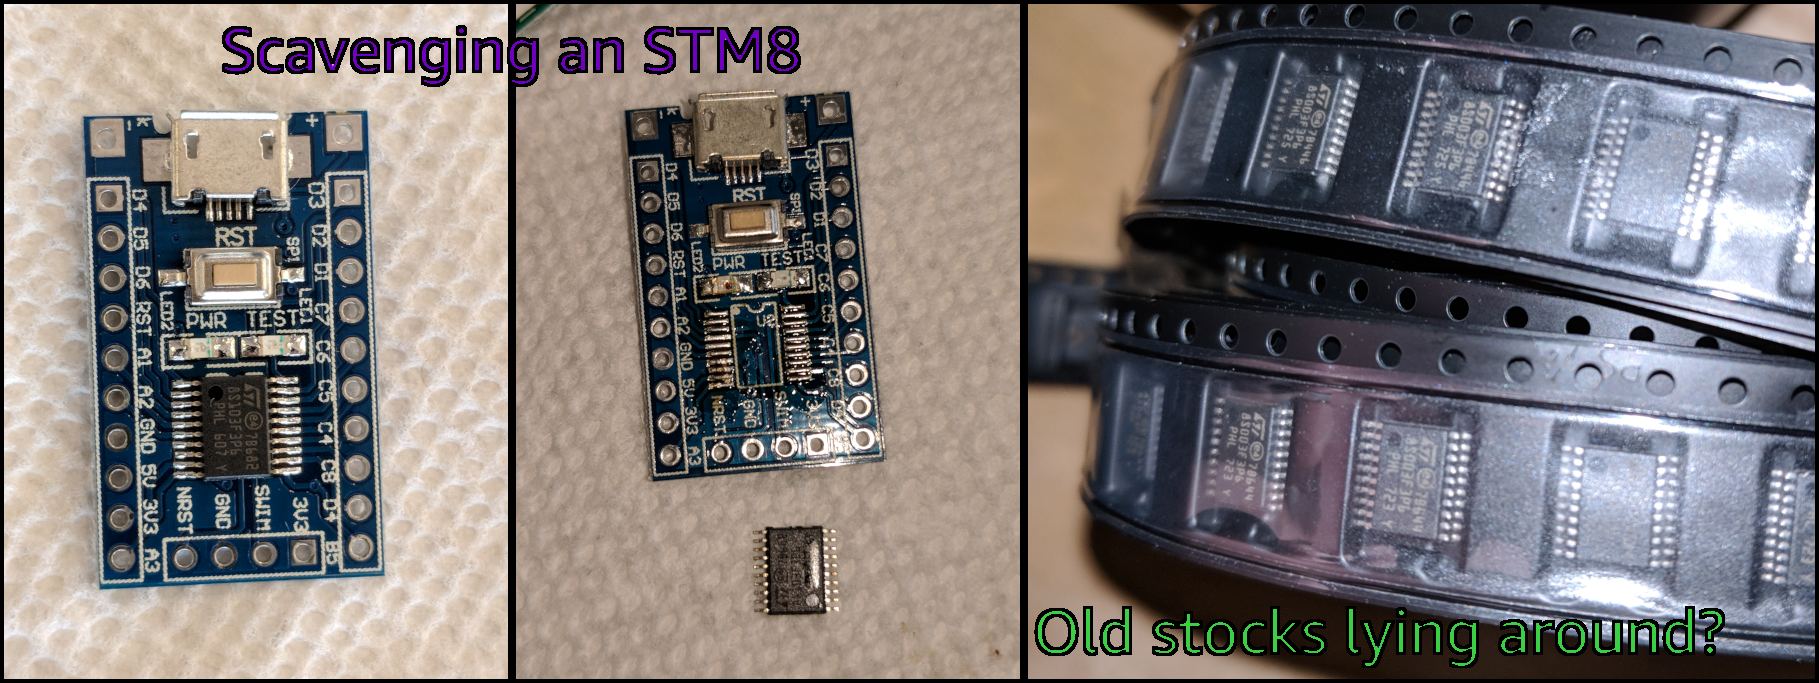 Finding STM8 Chips